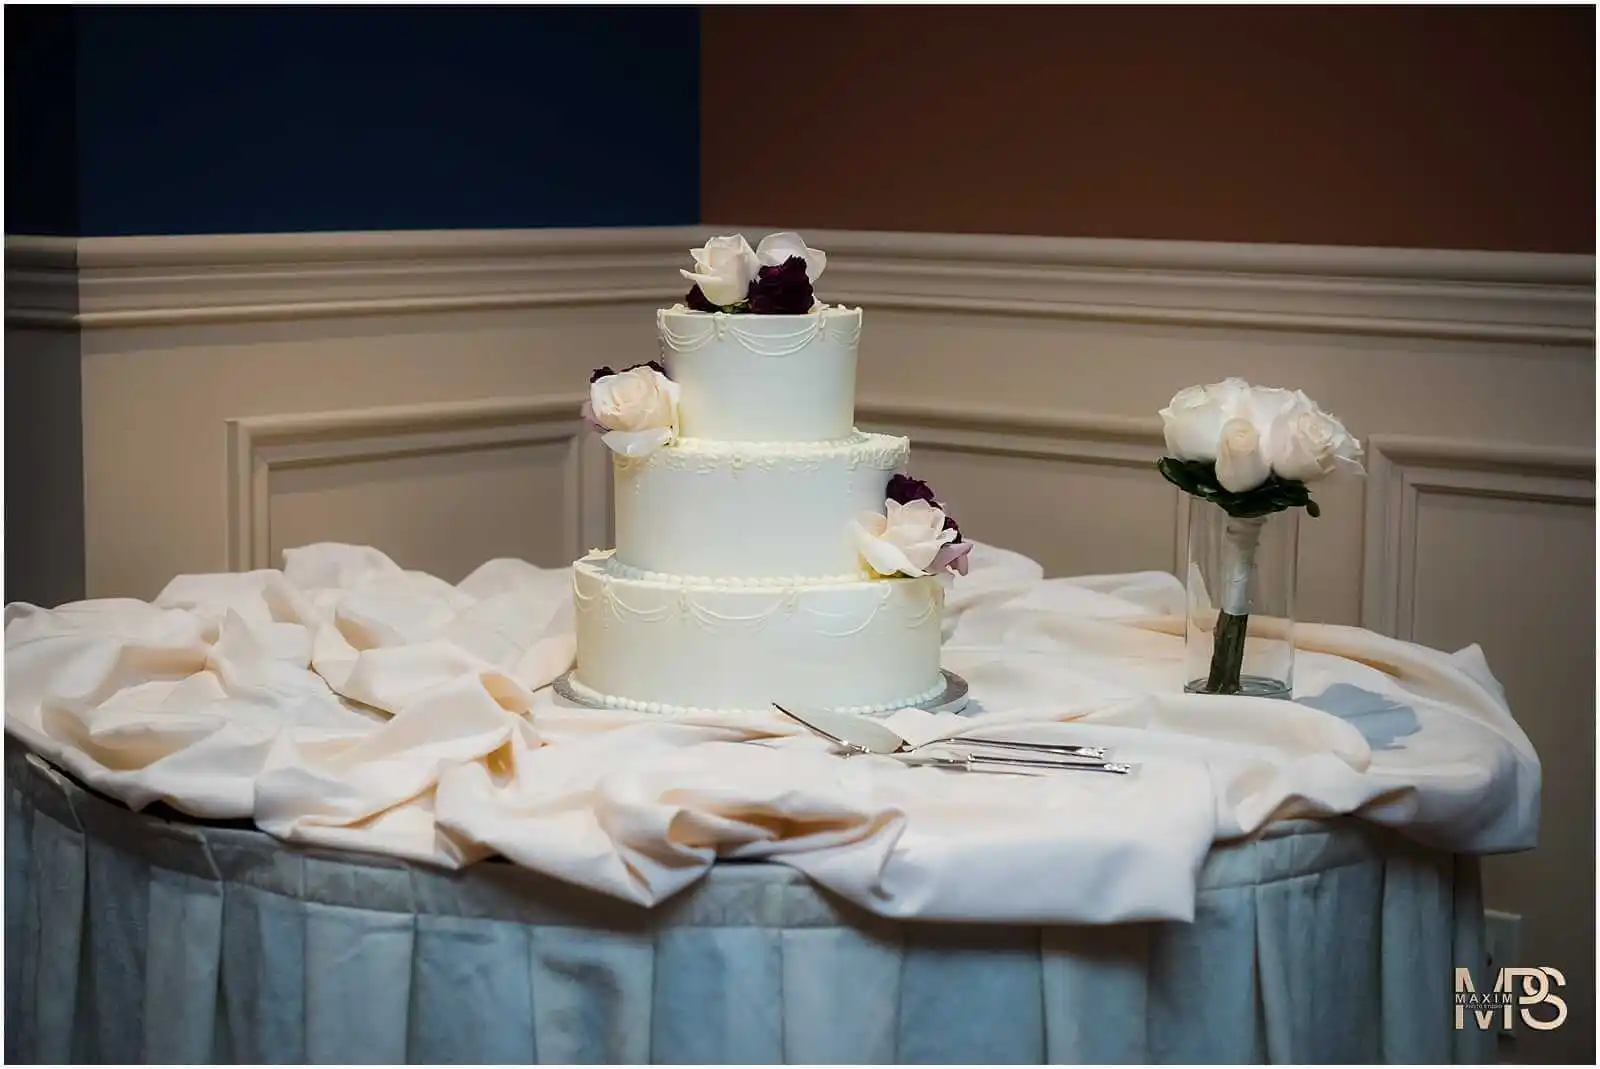 Sophisticated floral three-tier wedding cake at Covington venue.